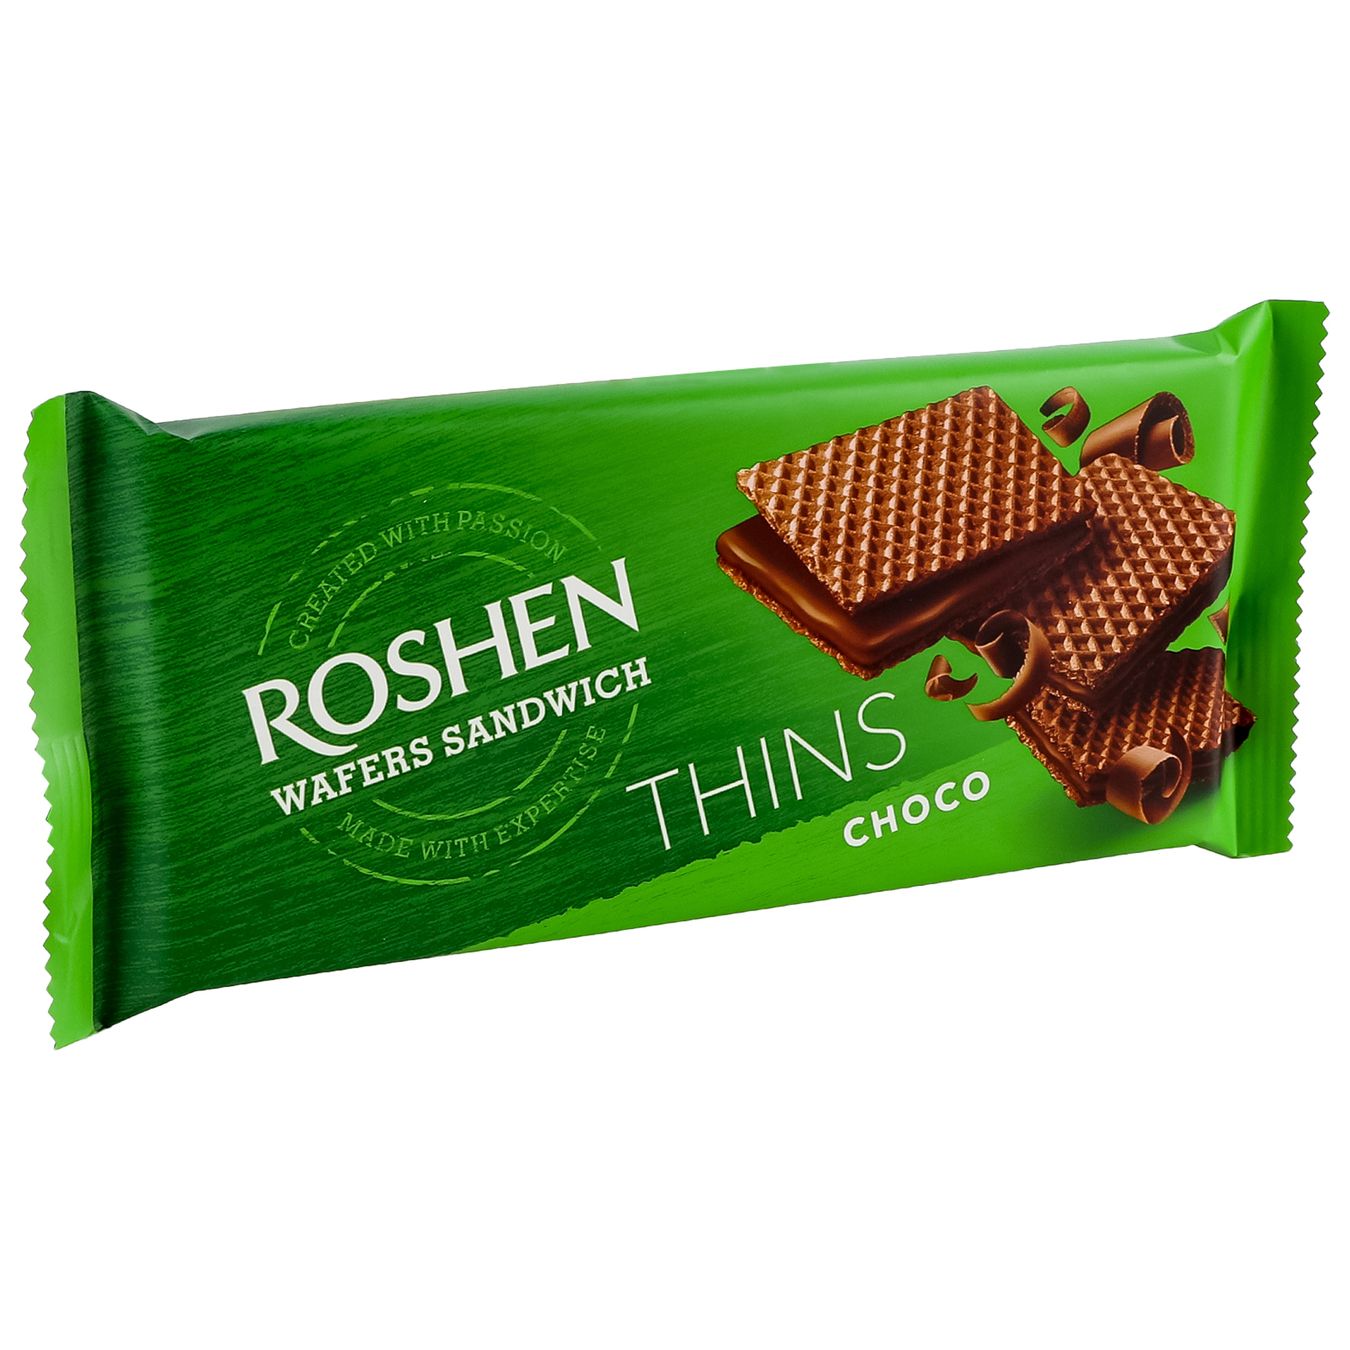 Roshen wafers sandwich thins chocolate 50g 2